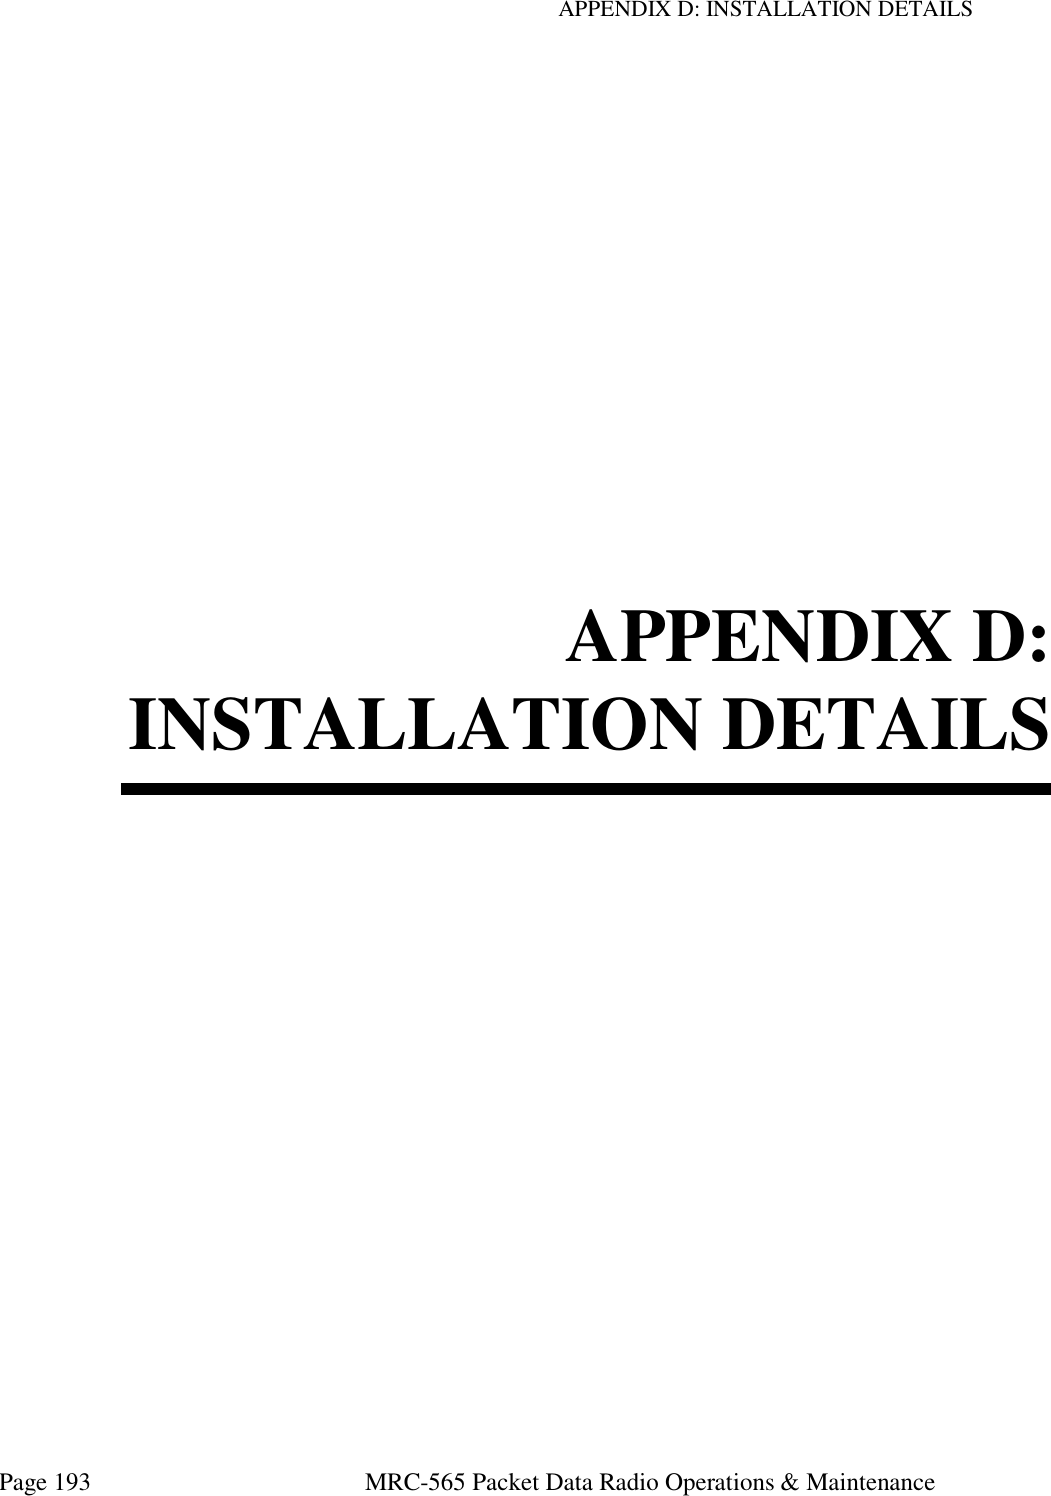 APPENDIX D: INSTALLATION DETAILS Page 193  MRC-565 Packet Data Radio Operations &amp; Maintenance   APPENDIX D: INSTALLATION DETAILS 